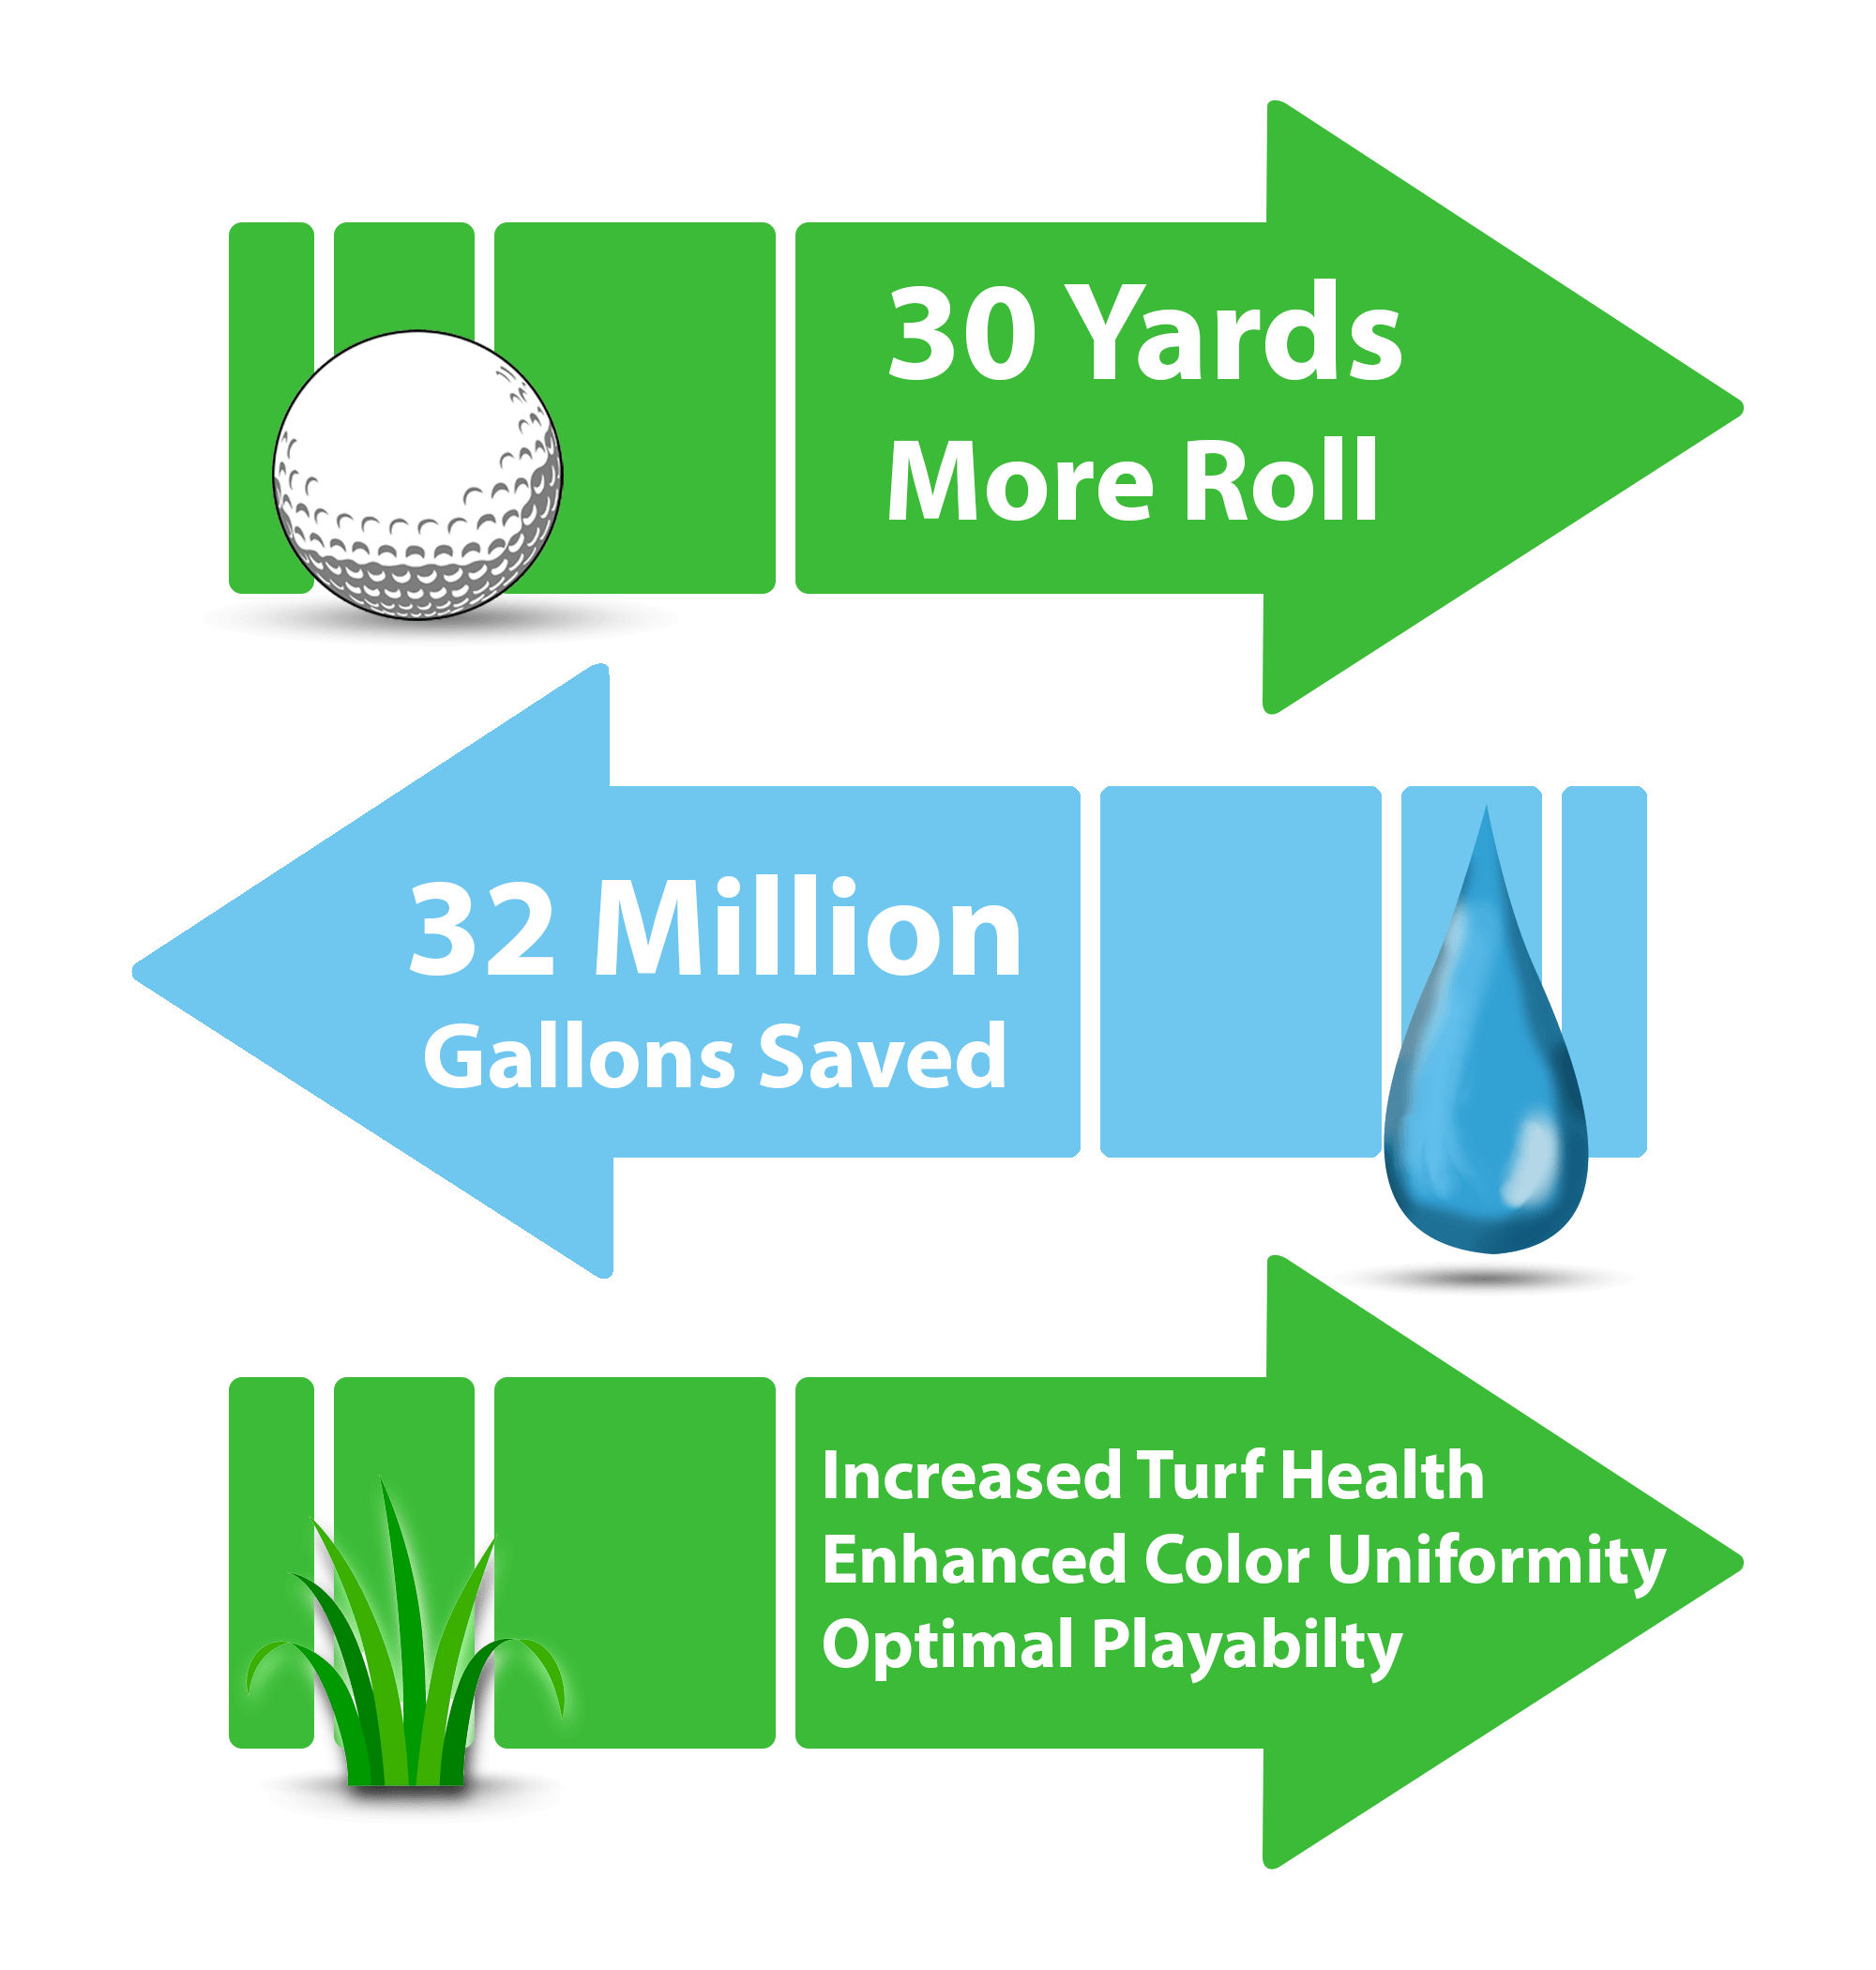 30 Yards More Roll 32 Million Gallons Saved Increased Turf Health Enhanced Color Uniformity Optimal Playability